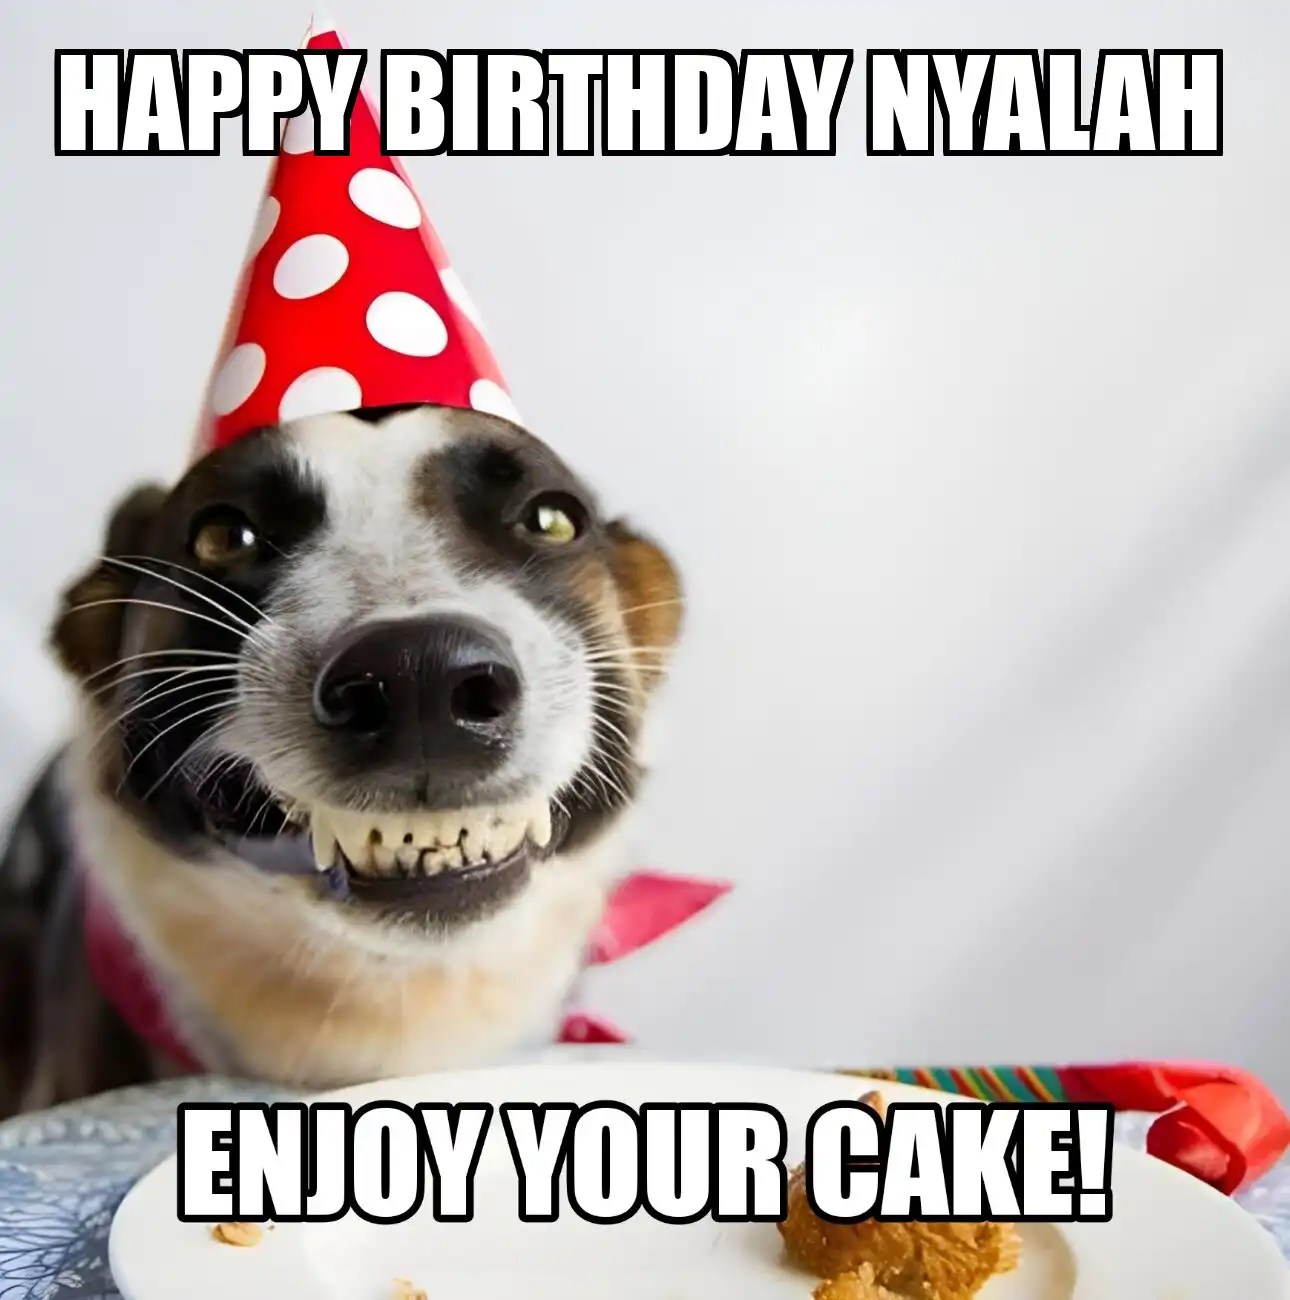 Happy Birthday Nyalah Enjoy Your Cake Dog Meme